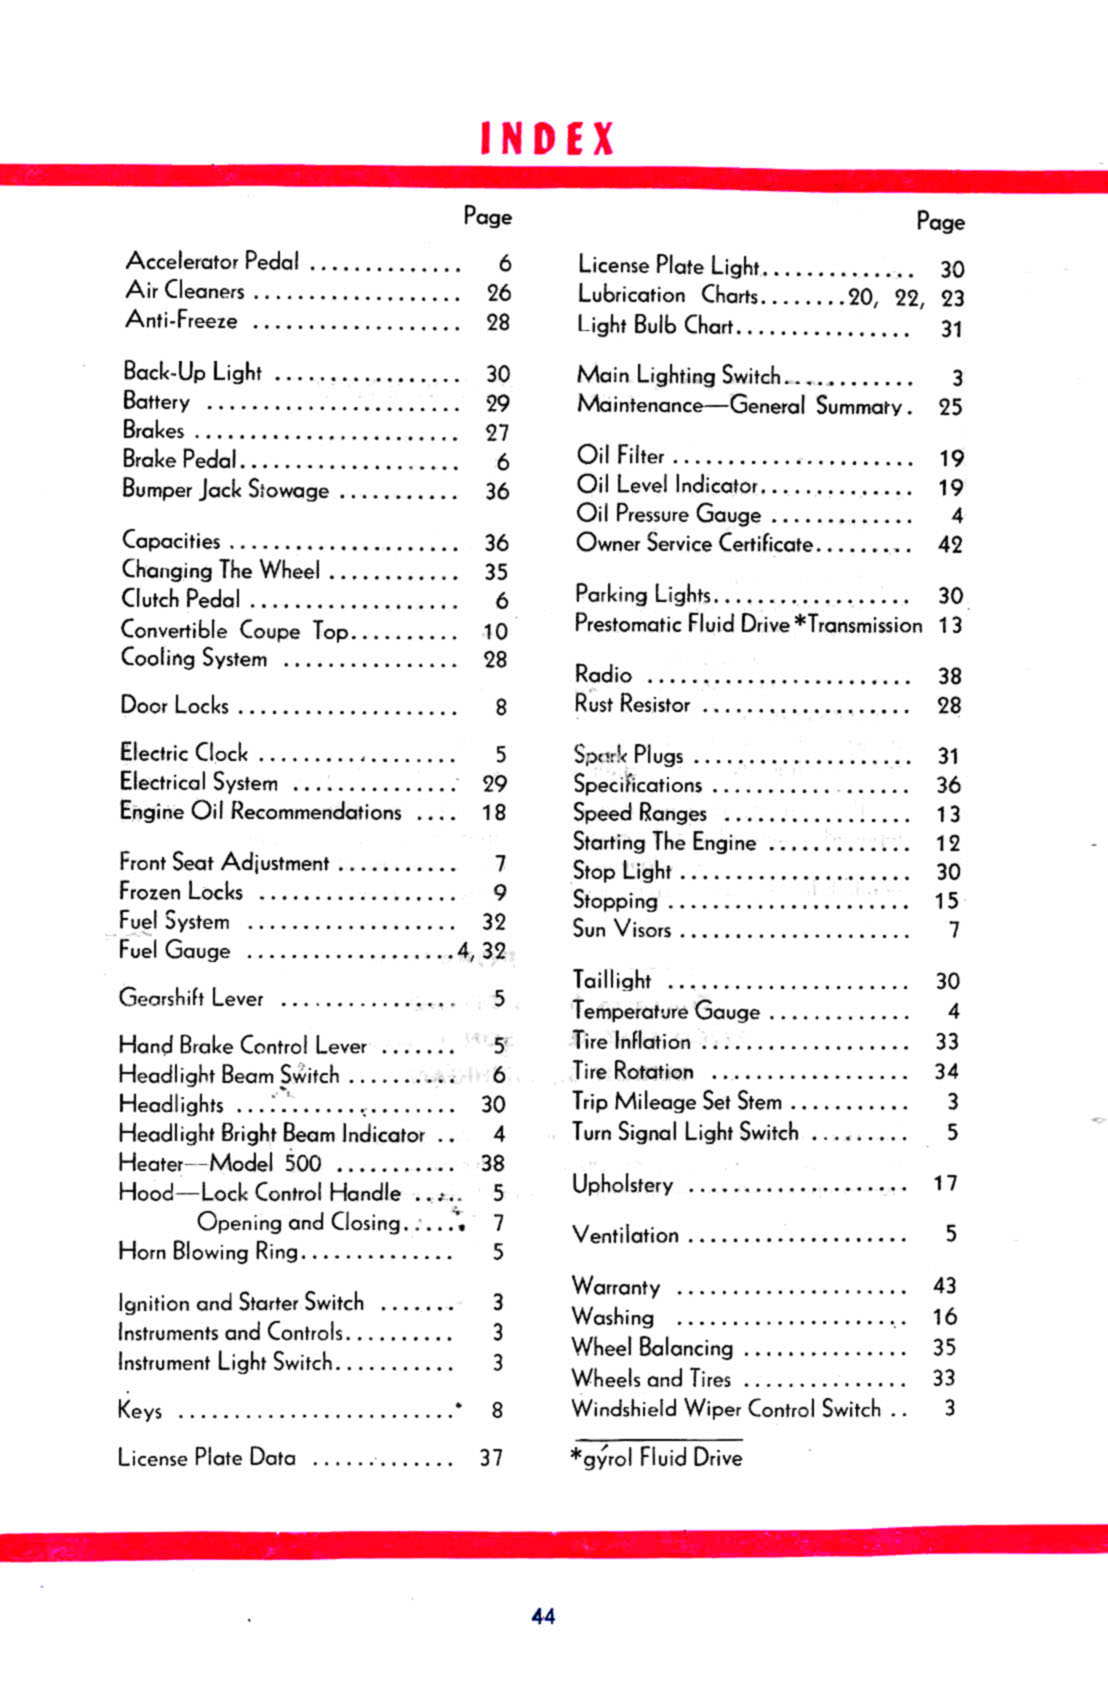 1950_Chrysler_C49_Owners_Manual-44-